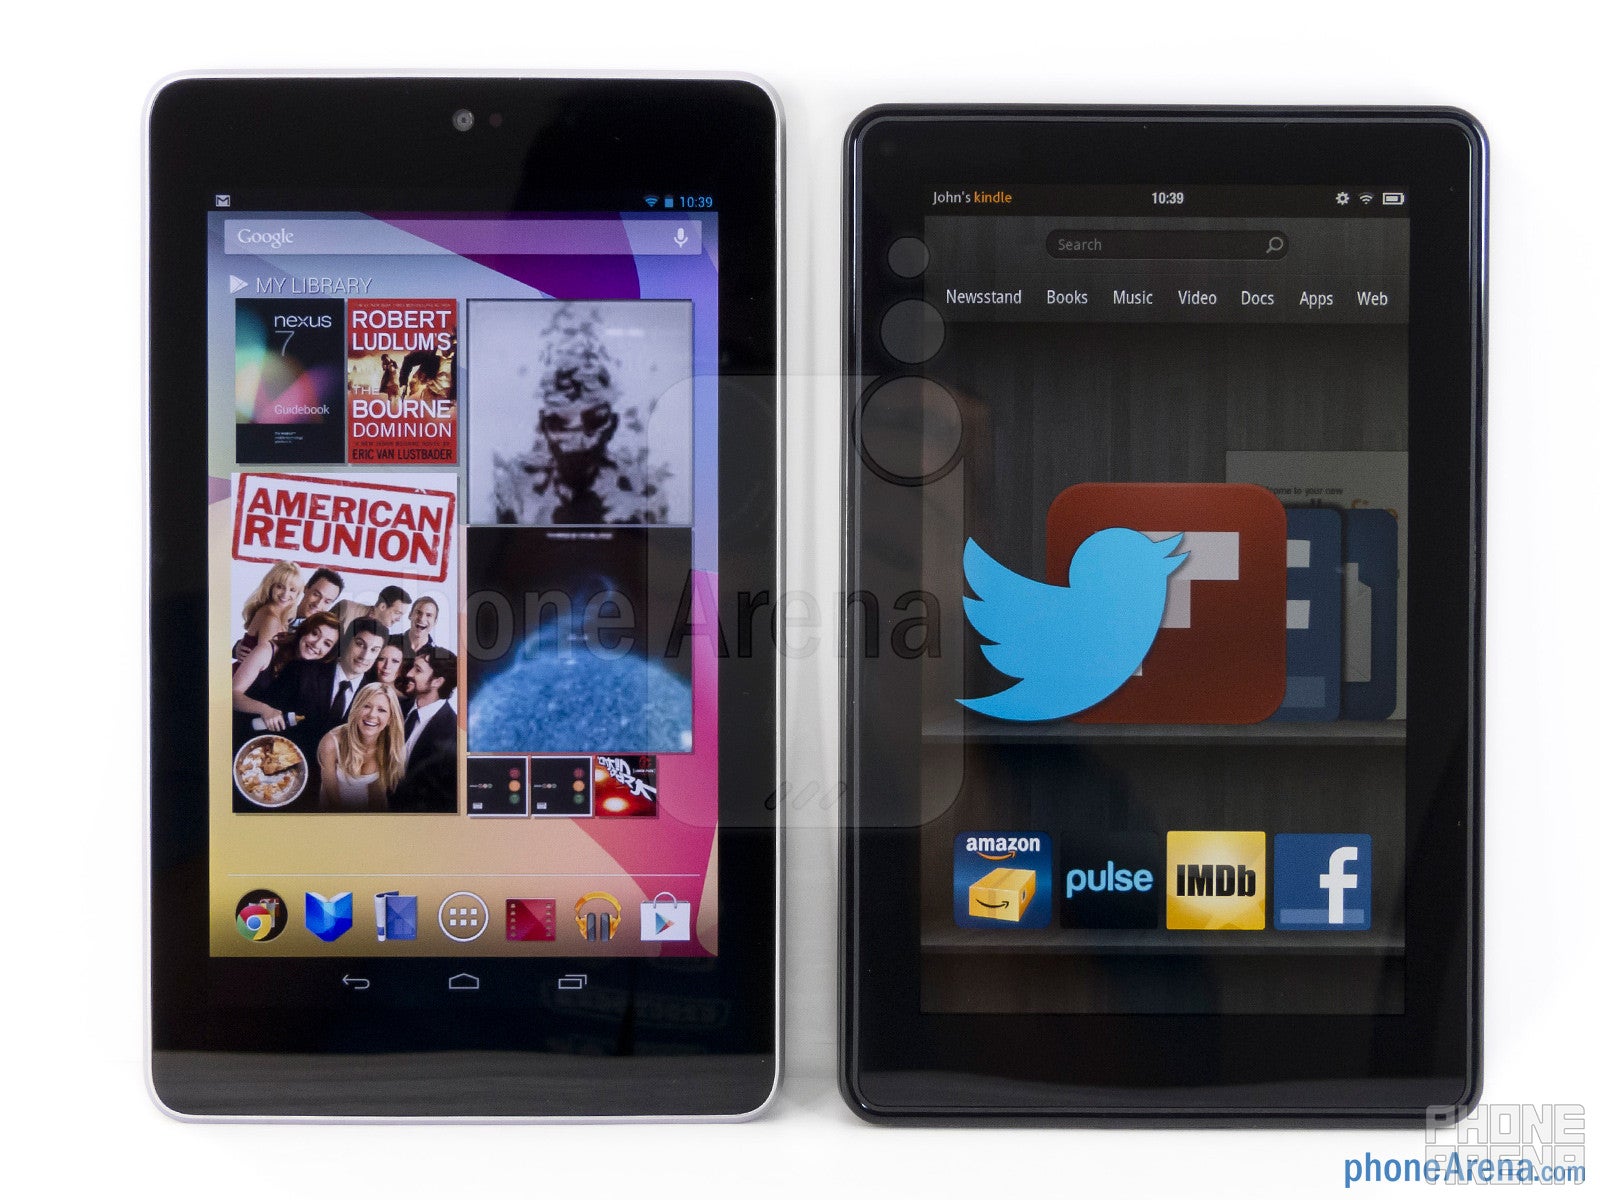 Google Nexus 7 vs Amazon Kindle Fire